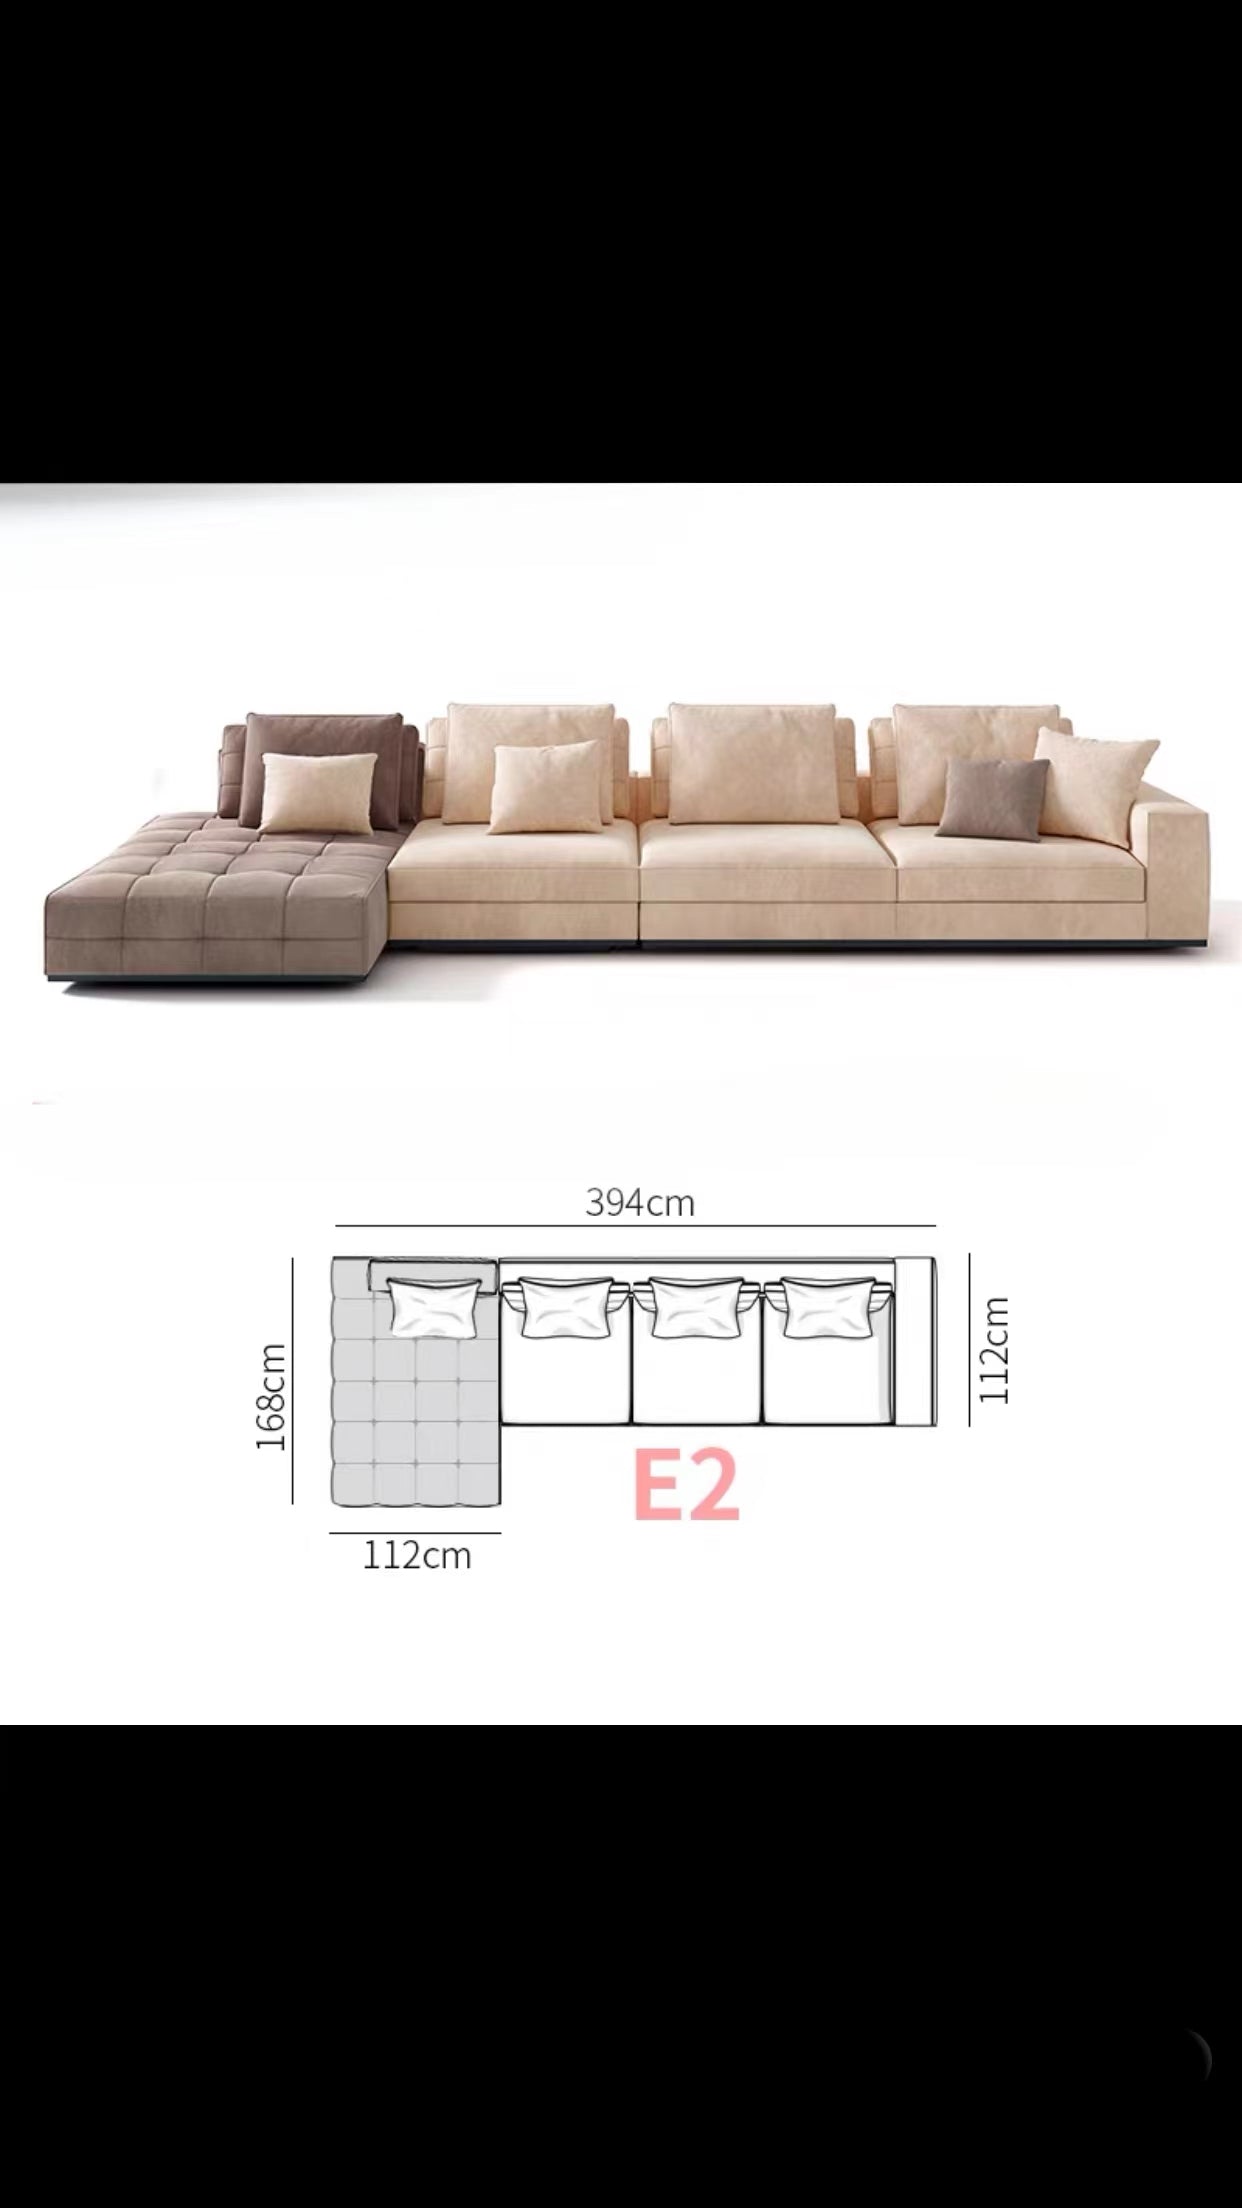 Daniel Junior Upholstered Sectional Sofa - 4 Seasons Home Gadgets